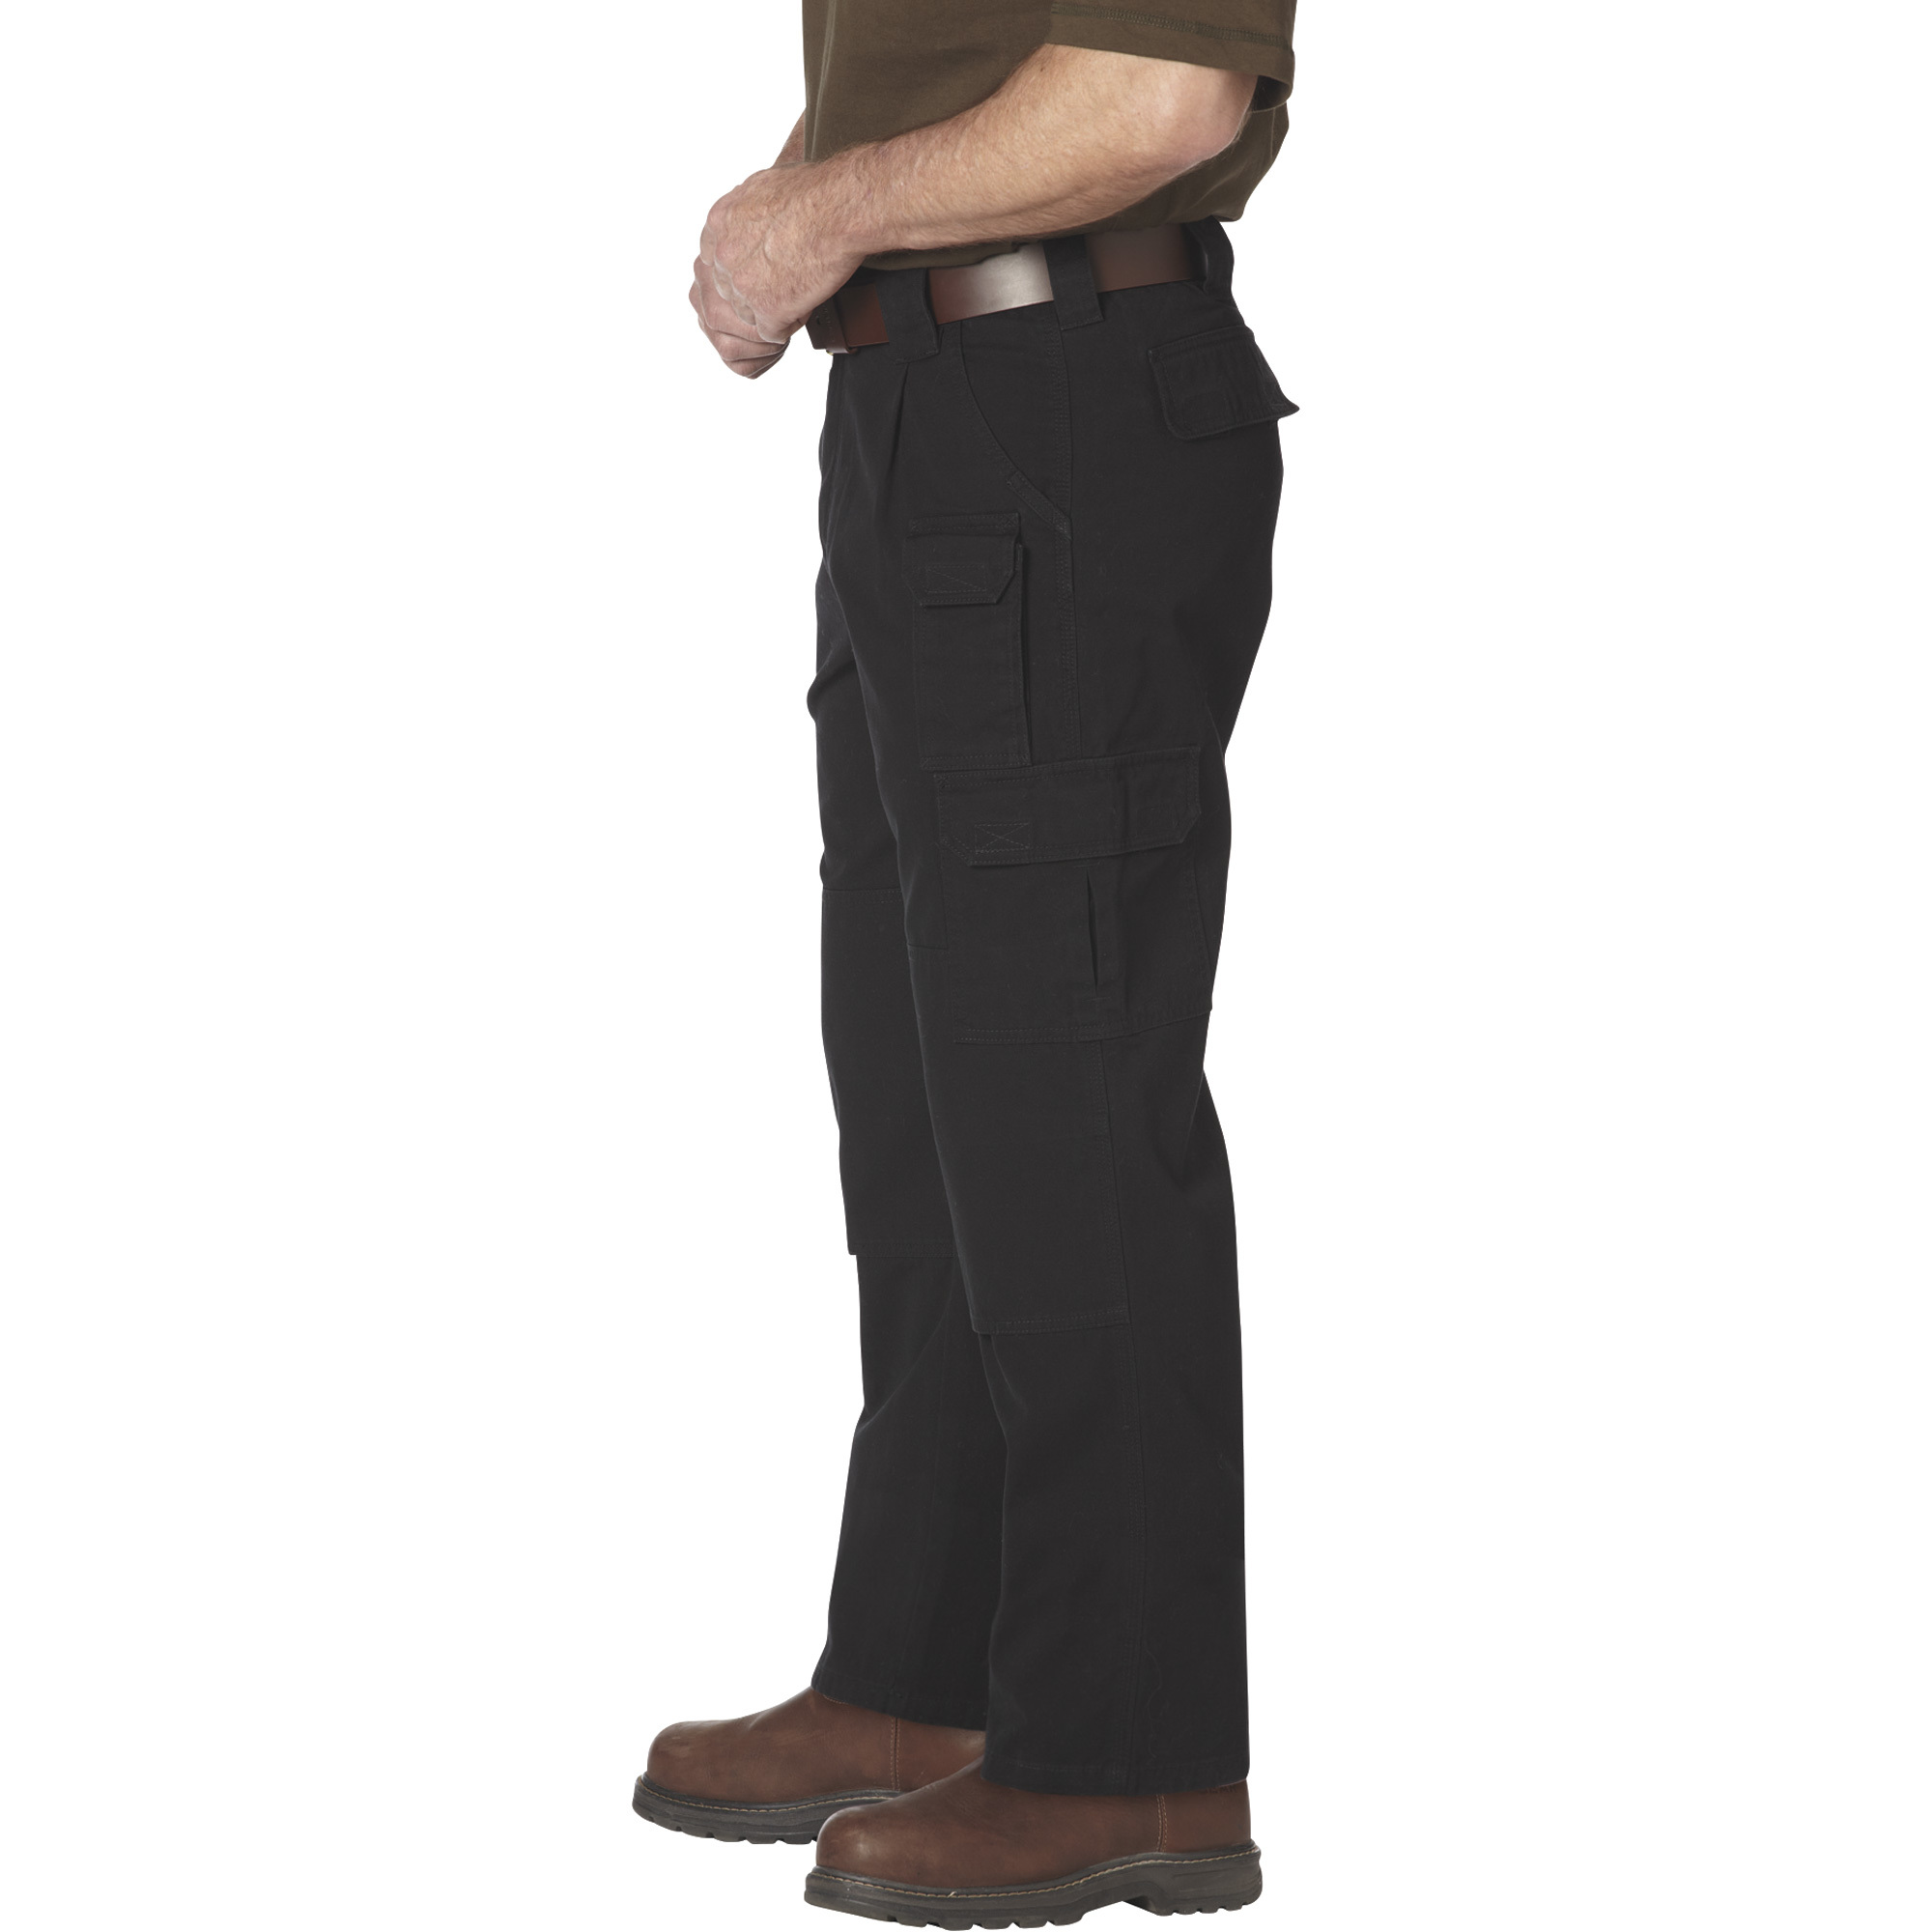 Gravel Gear Men's 7-Pocket Tactical Pants with Teflon - Black, 36Inch Waist x 32Inch Inseam